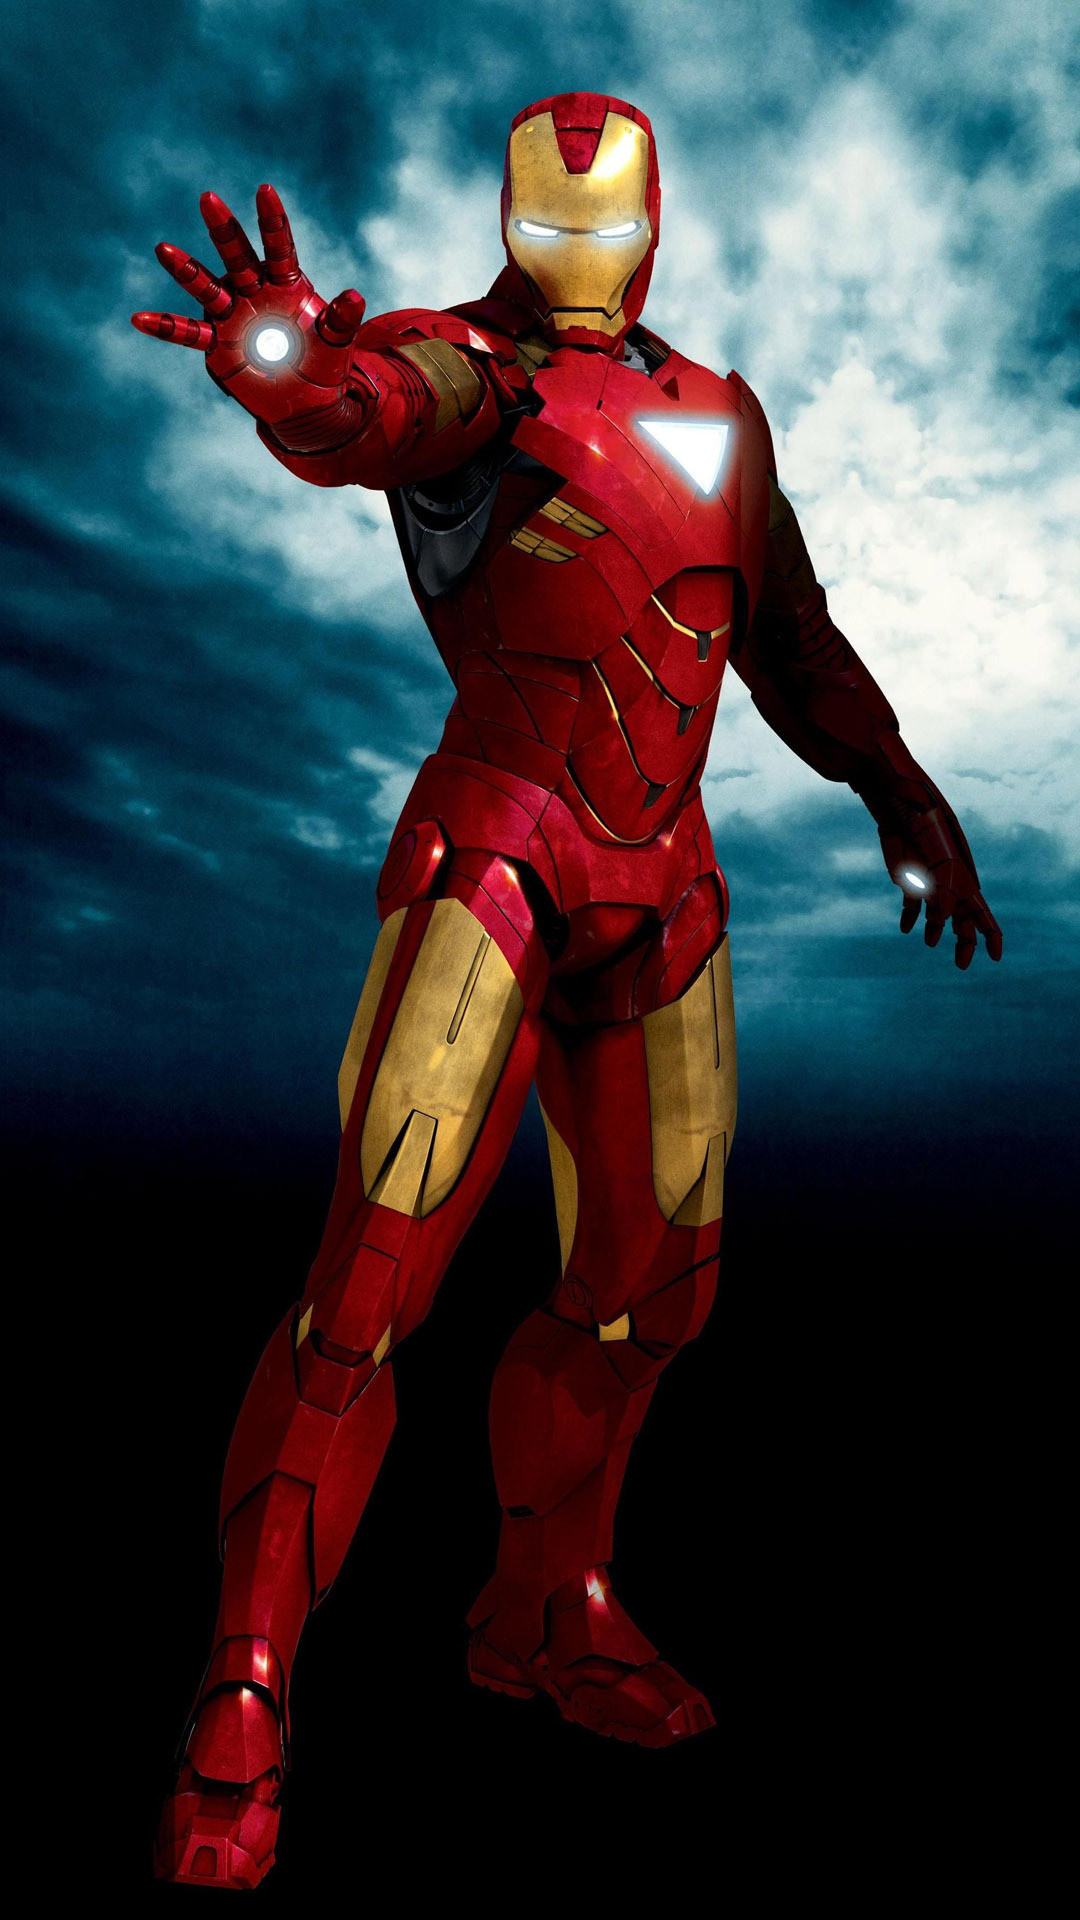 1080x1920 Iron Man Marvel iphone wallpapers Iron Man Marvel iphone wallpaper 2015